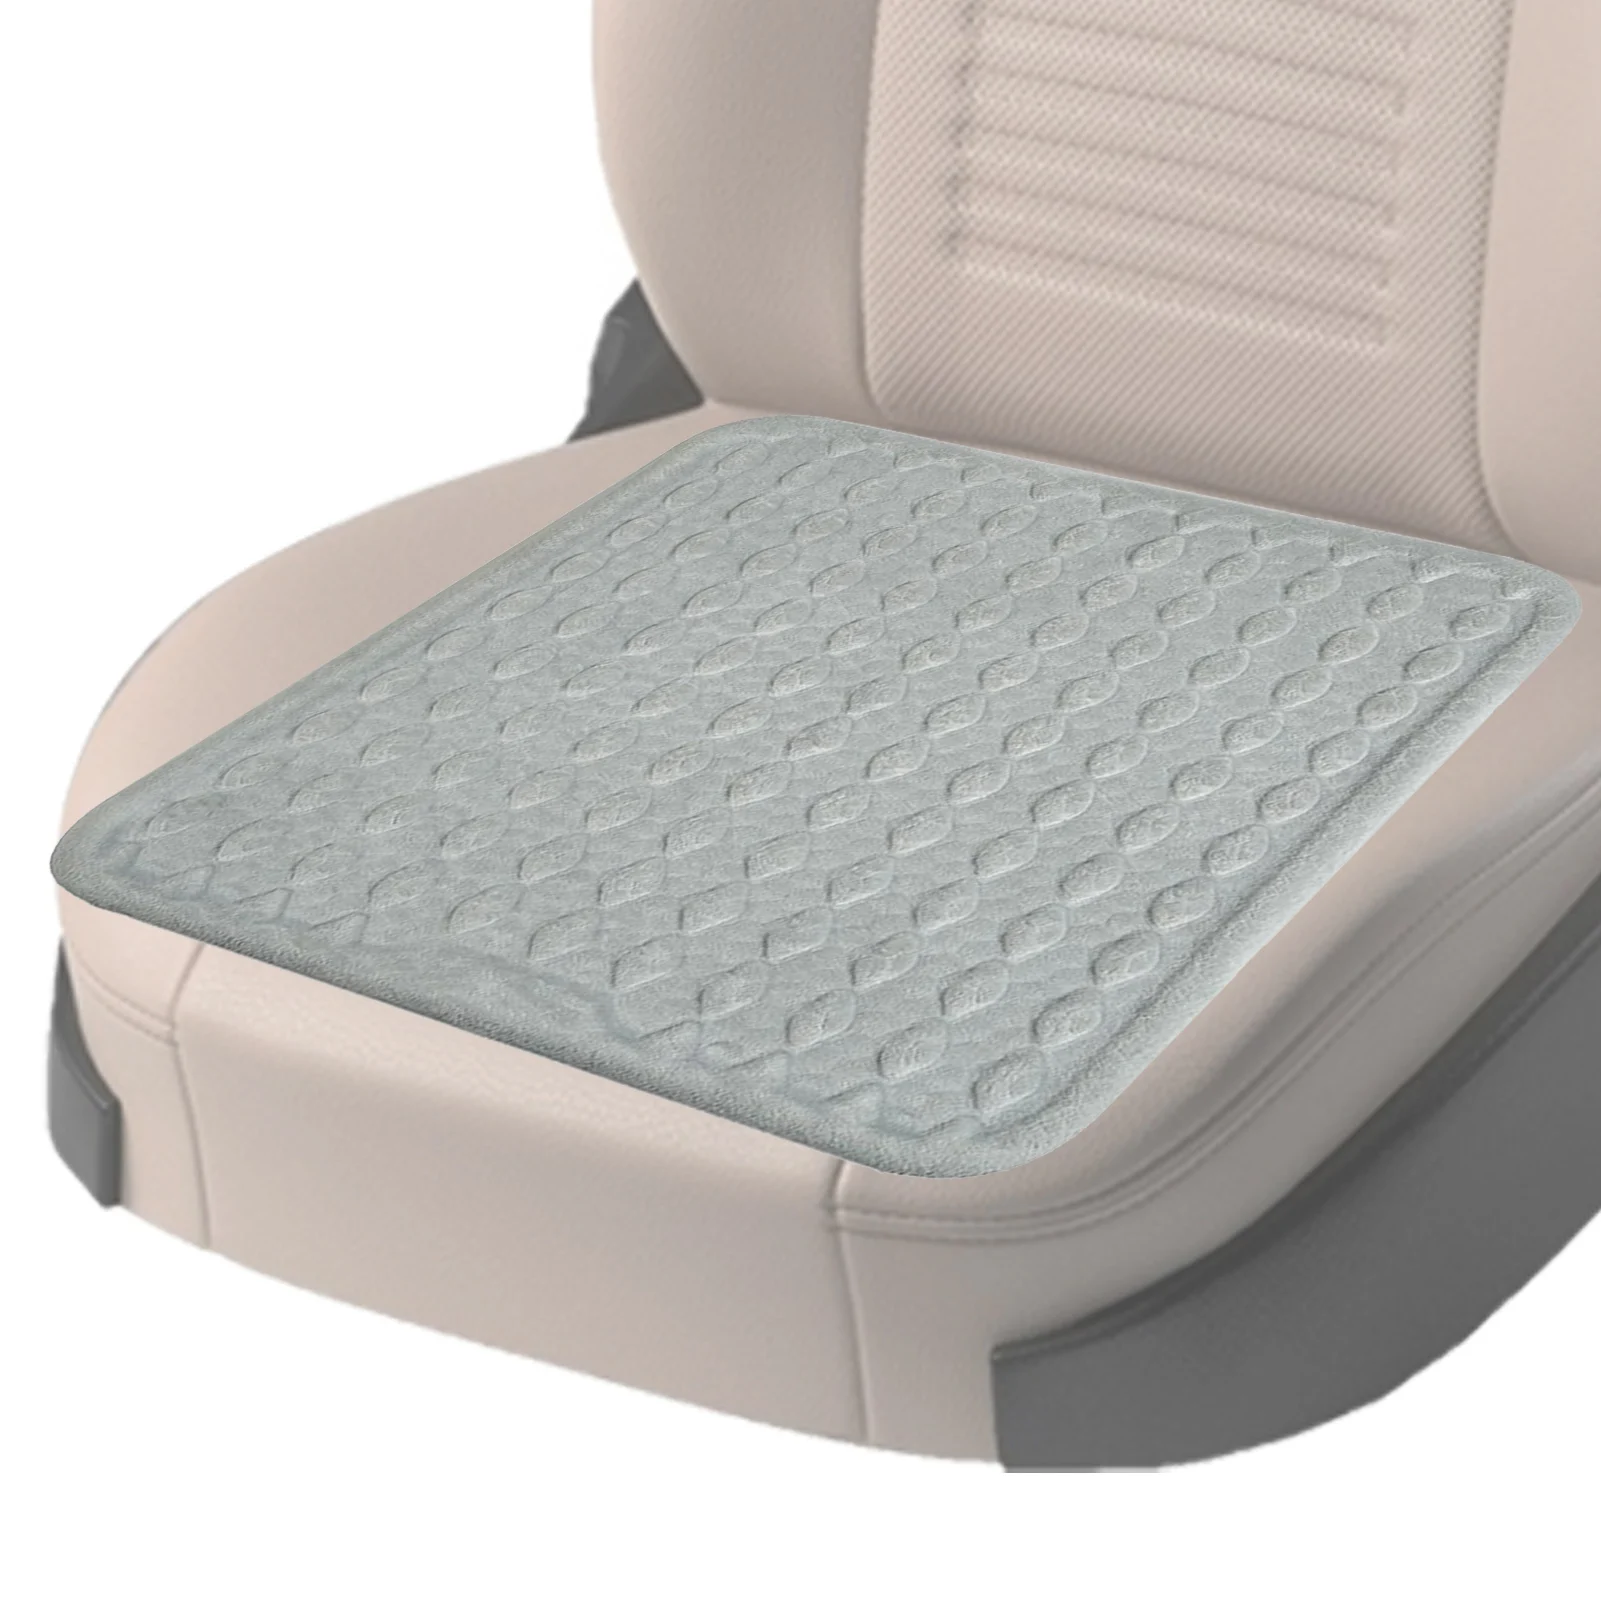 https://ae01.alicdn.com/kf/Sf60c998e6cad42af8bd40d520ef0f0ae9/Car-Seat-Cushion-Anti-slip-Mat-Breathable-Summer-Honeycomb-Gel-Seat-Cushion-For-Car-Interiors-Protection.jpg